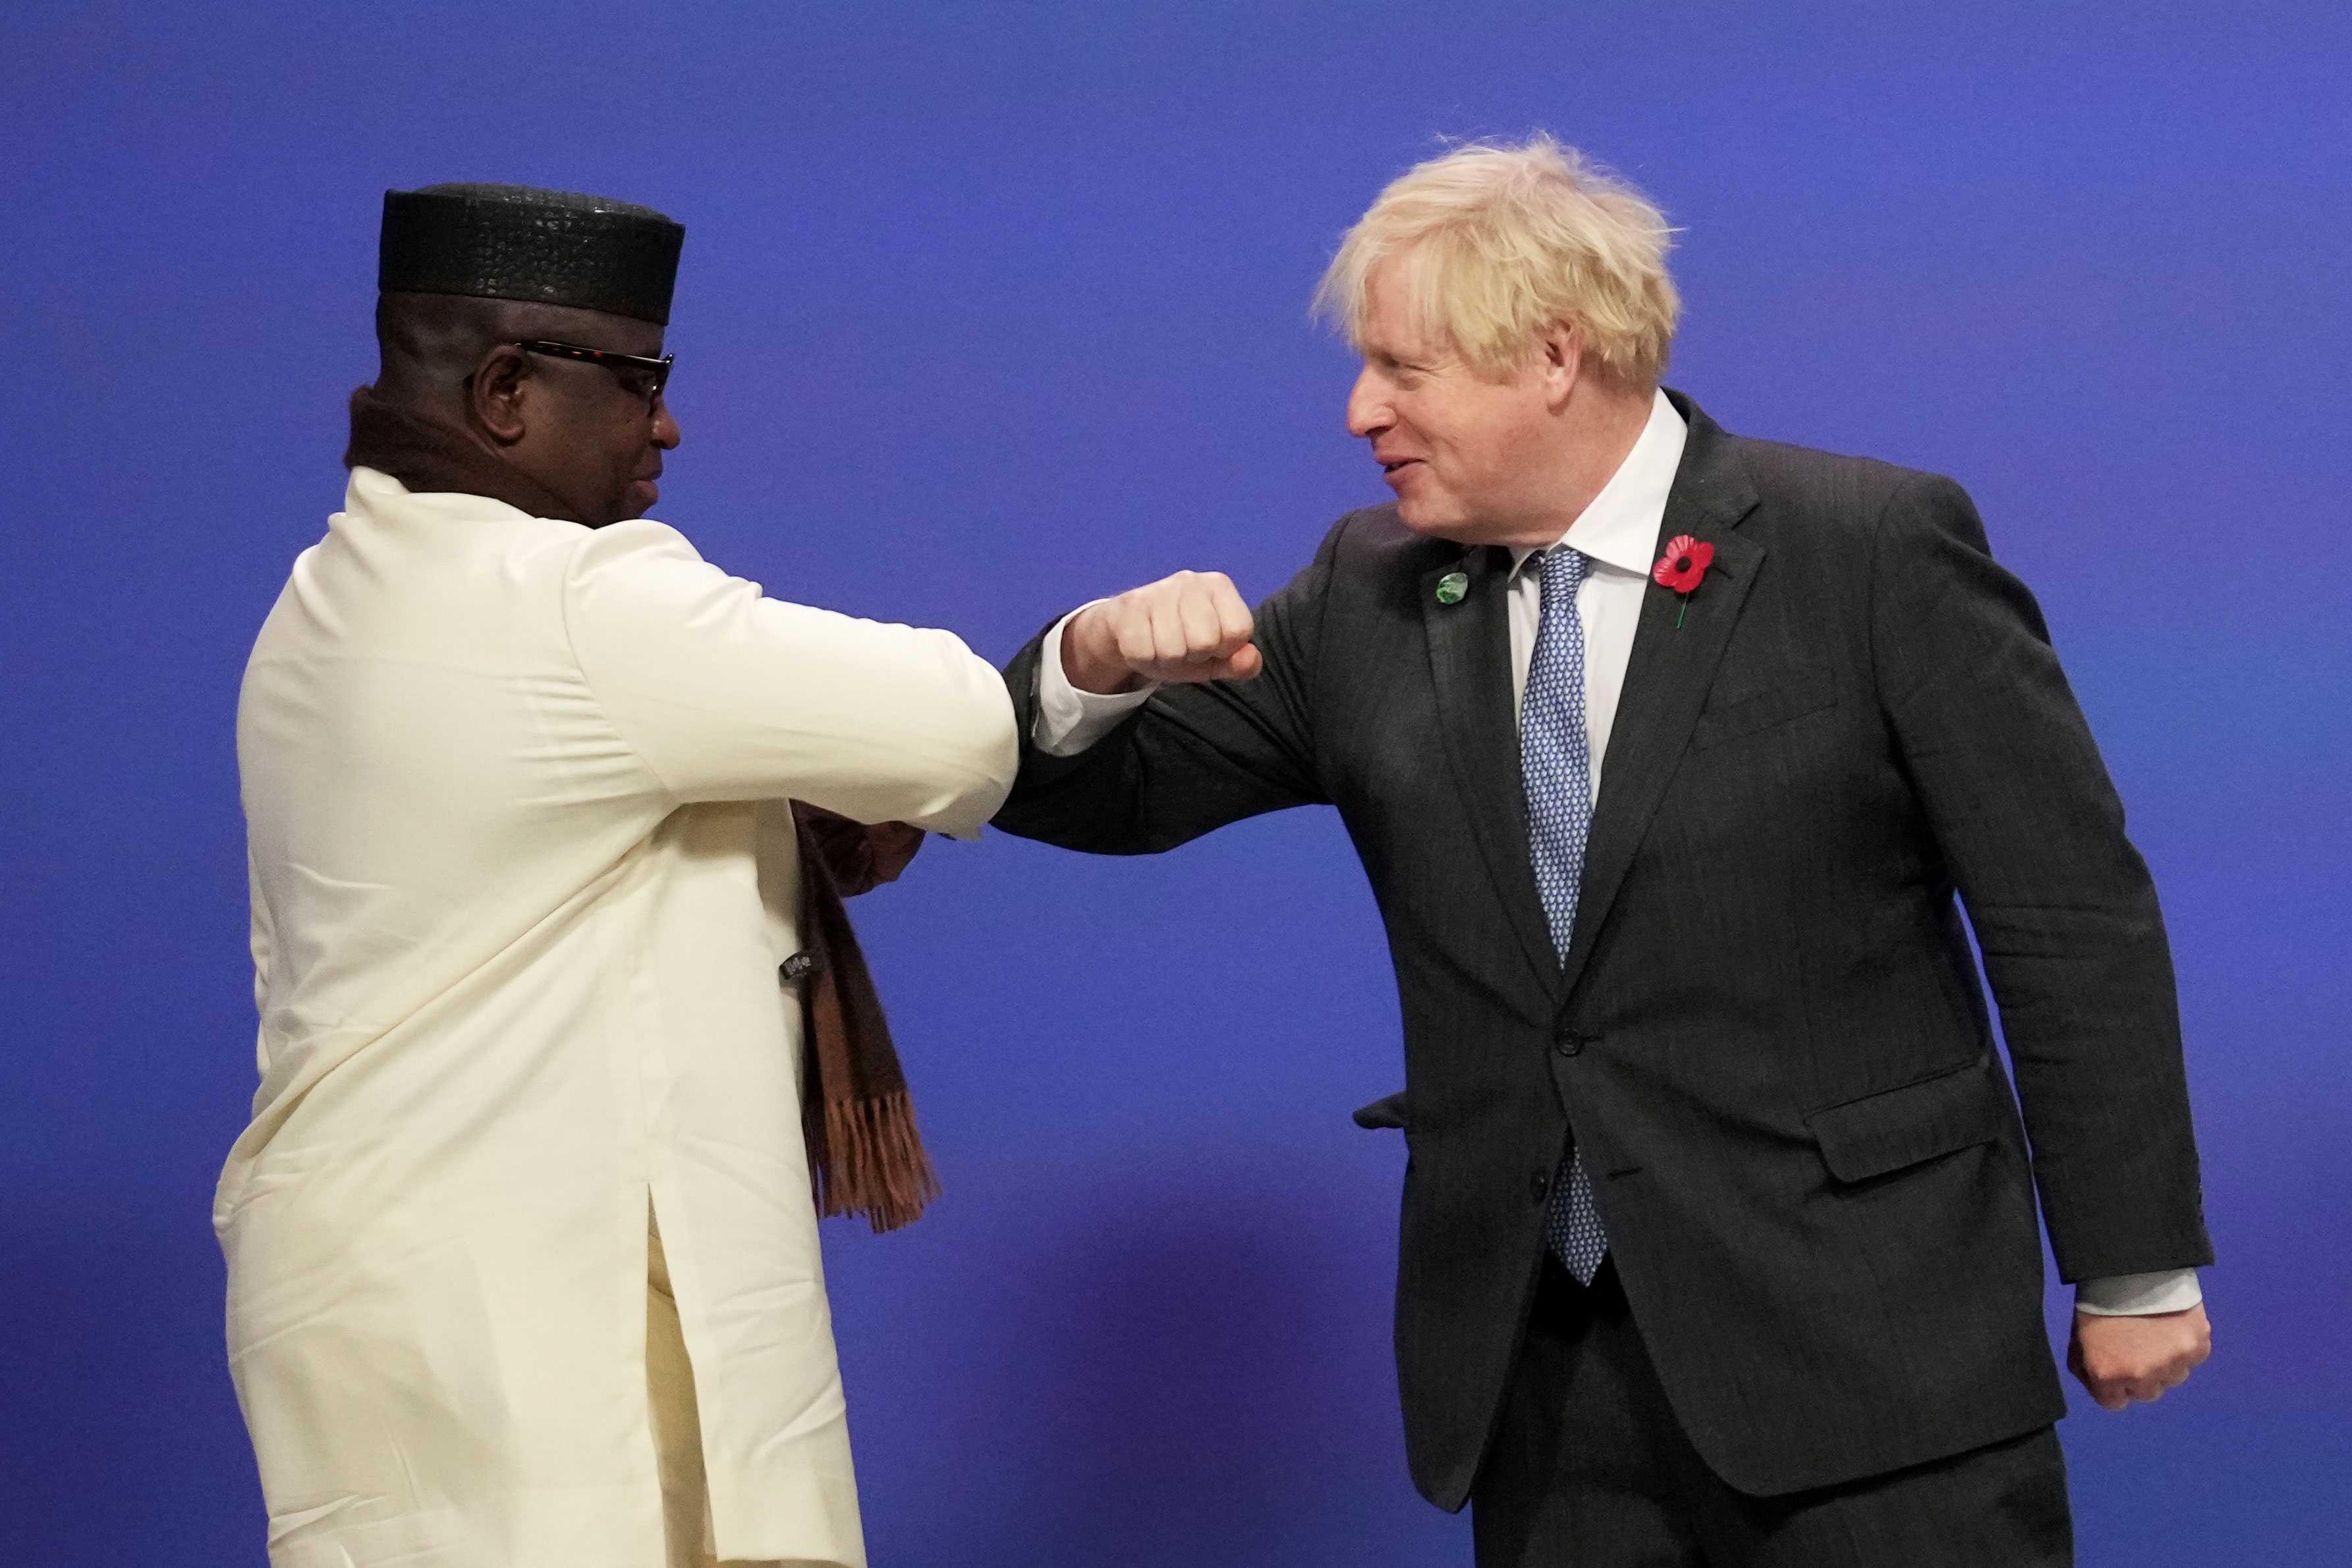 British Prime Minister Boris Johnson greets Sierra Leone's President Julius Maada Bio during arrivals at the Scottish Event Campus in Glasgow, Scotland, on November 1.